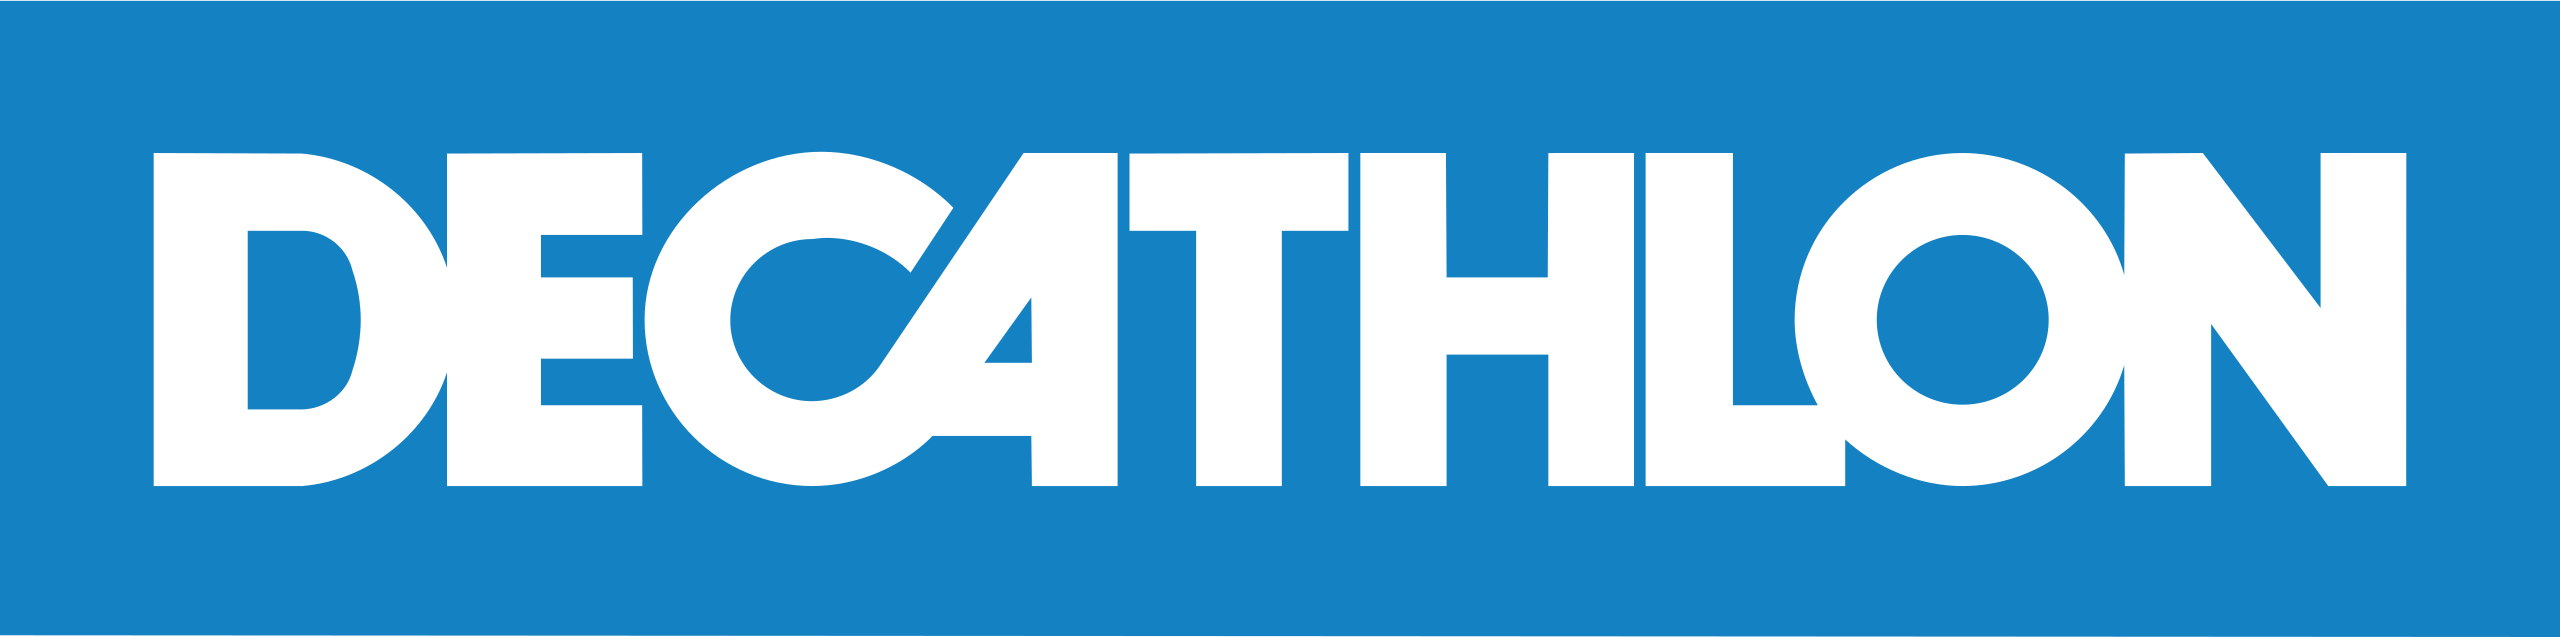 Decathlon - logo